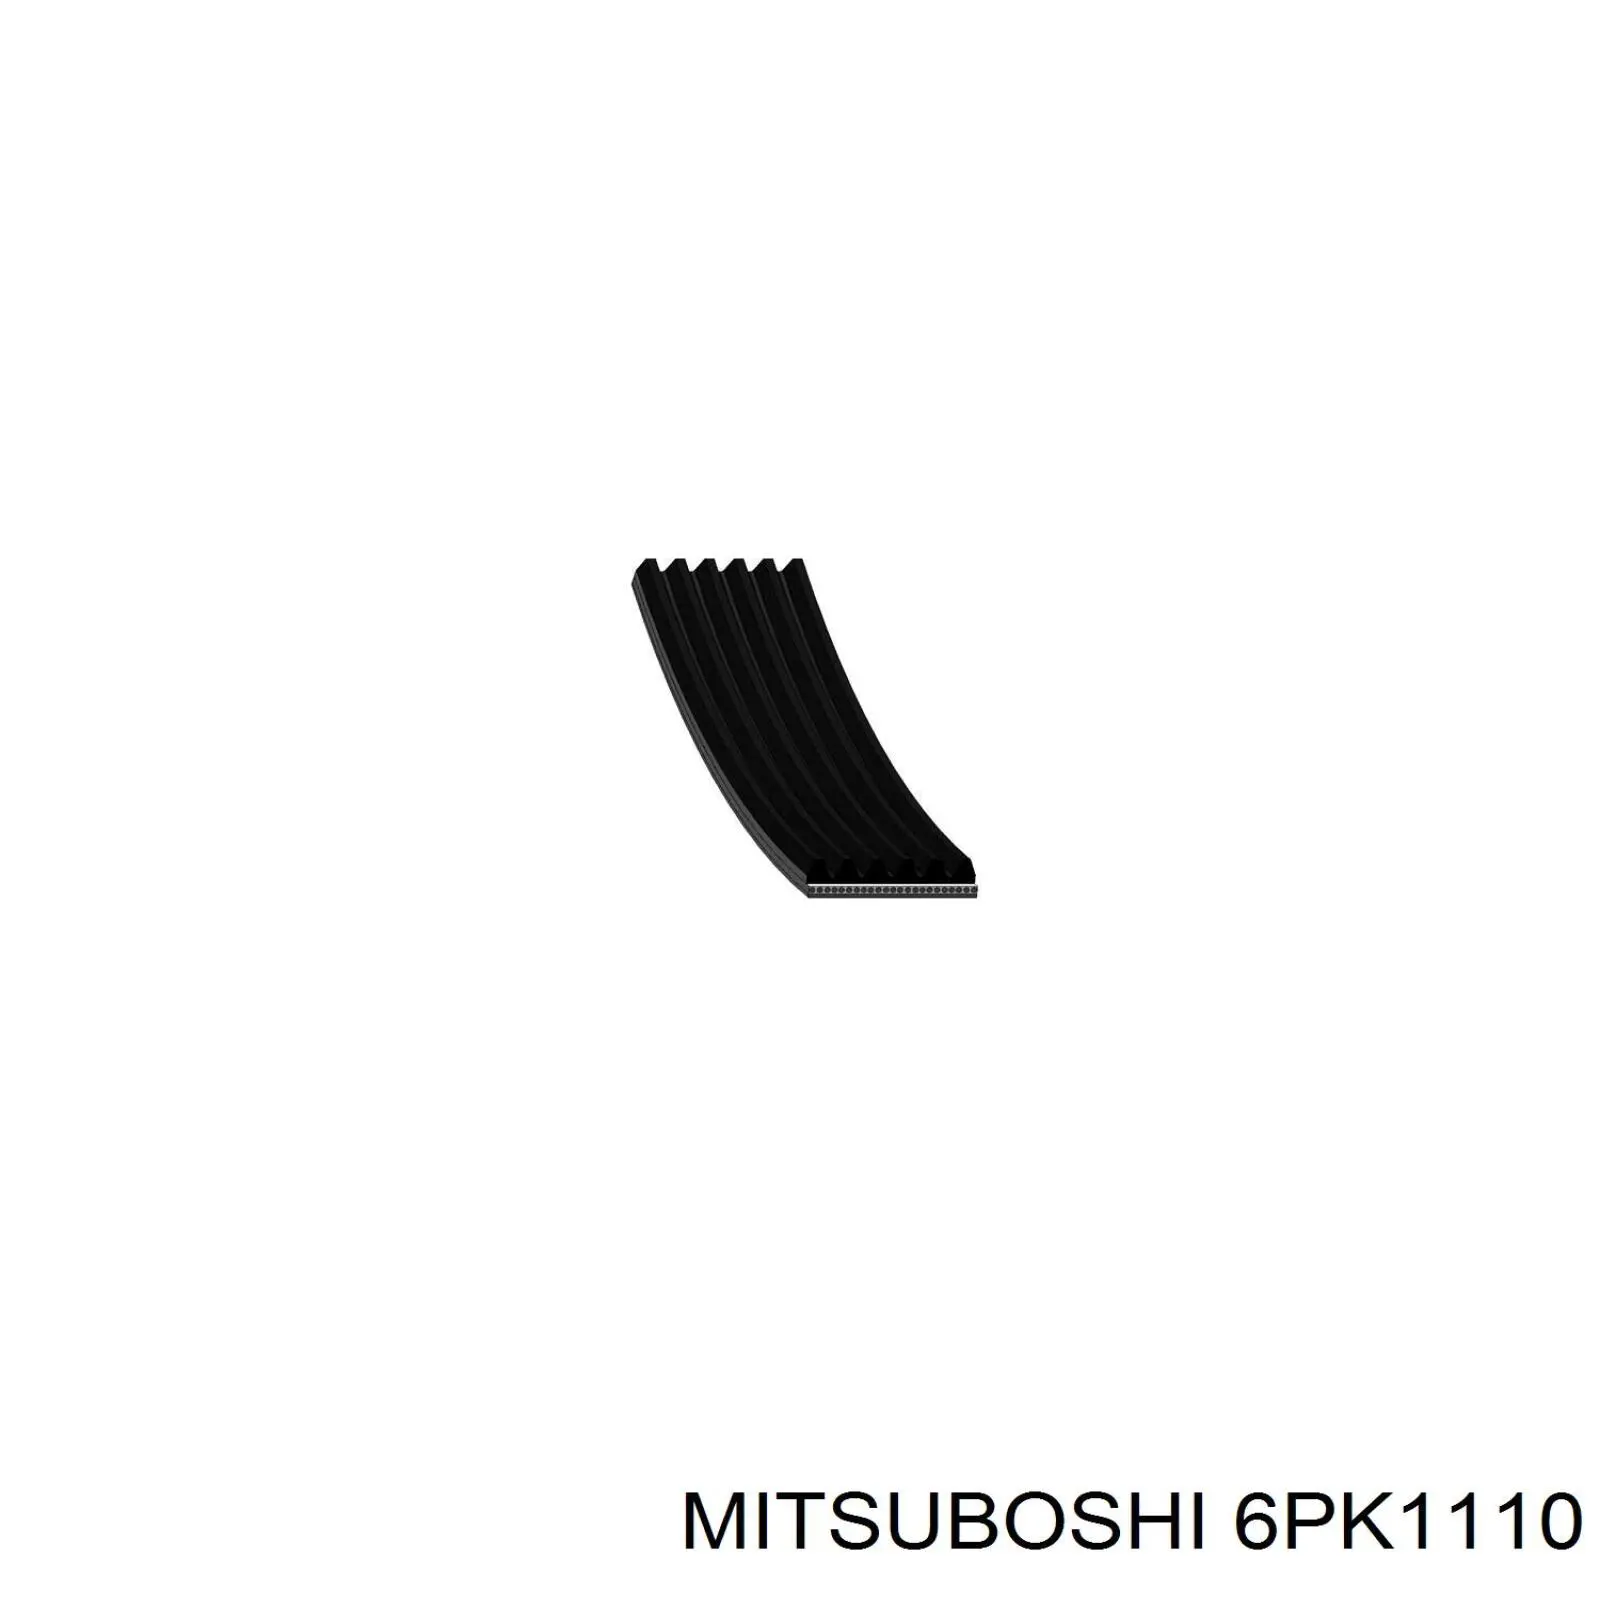 6PK1110 Mitsuboshi correa trapezoidal